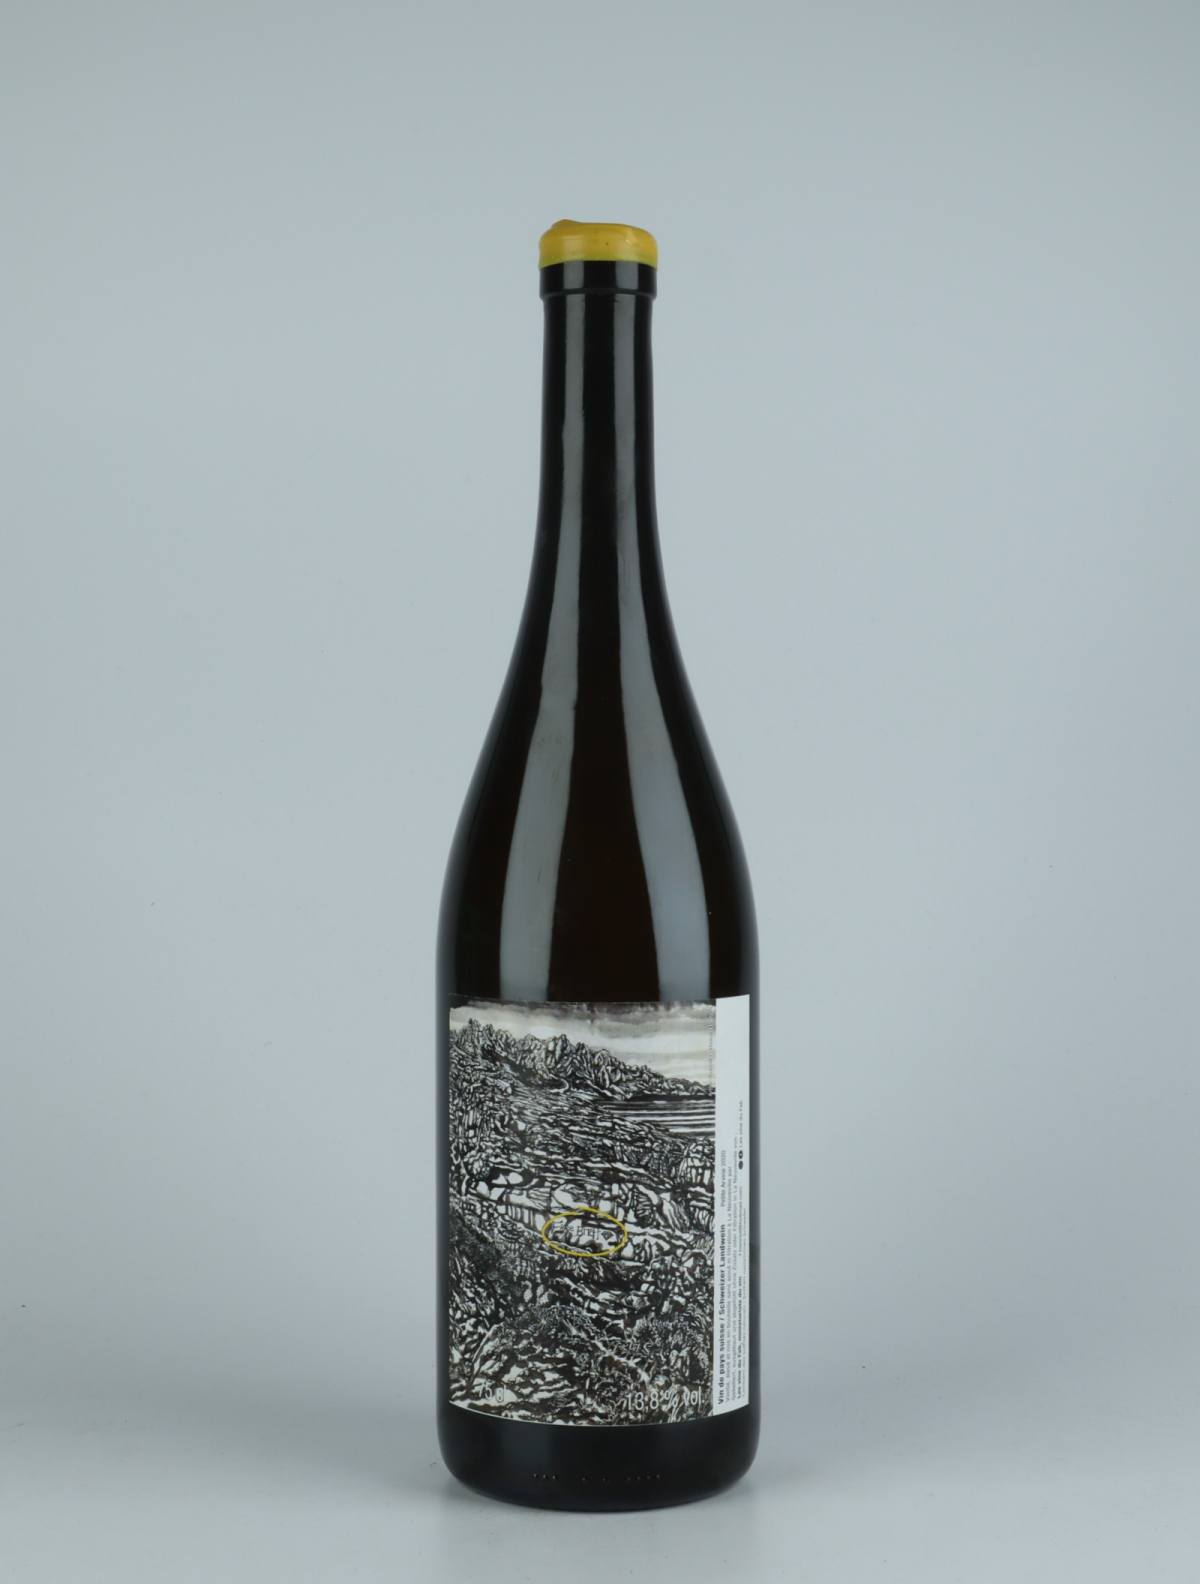 A bottle 2020 Petit Arvine White wine from Les Vins du Fab, Neuchâtel in 